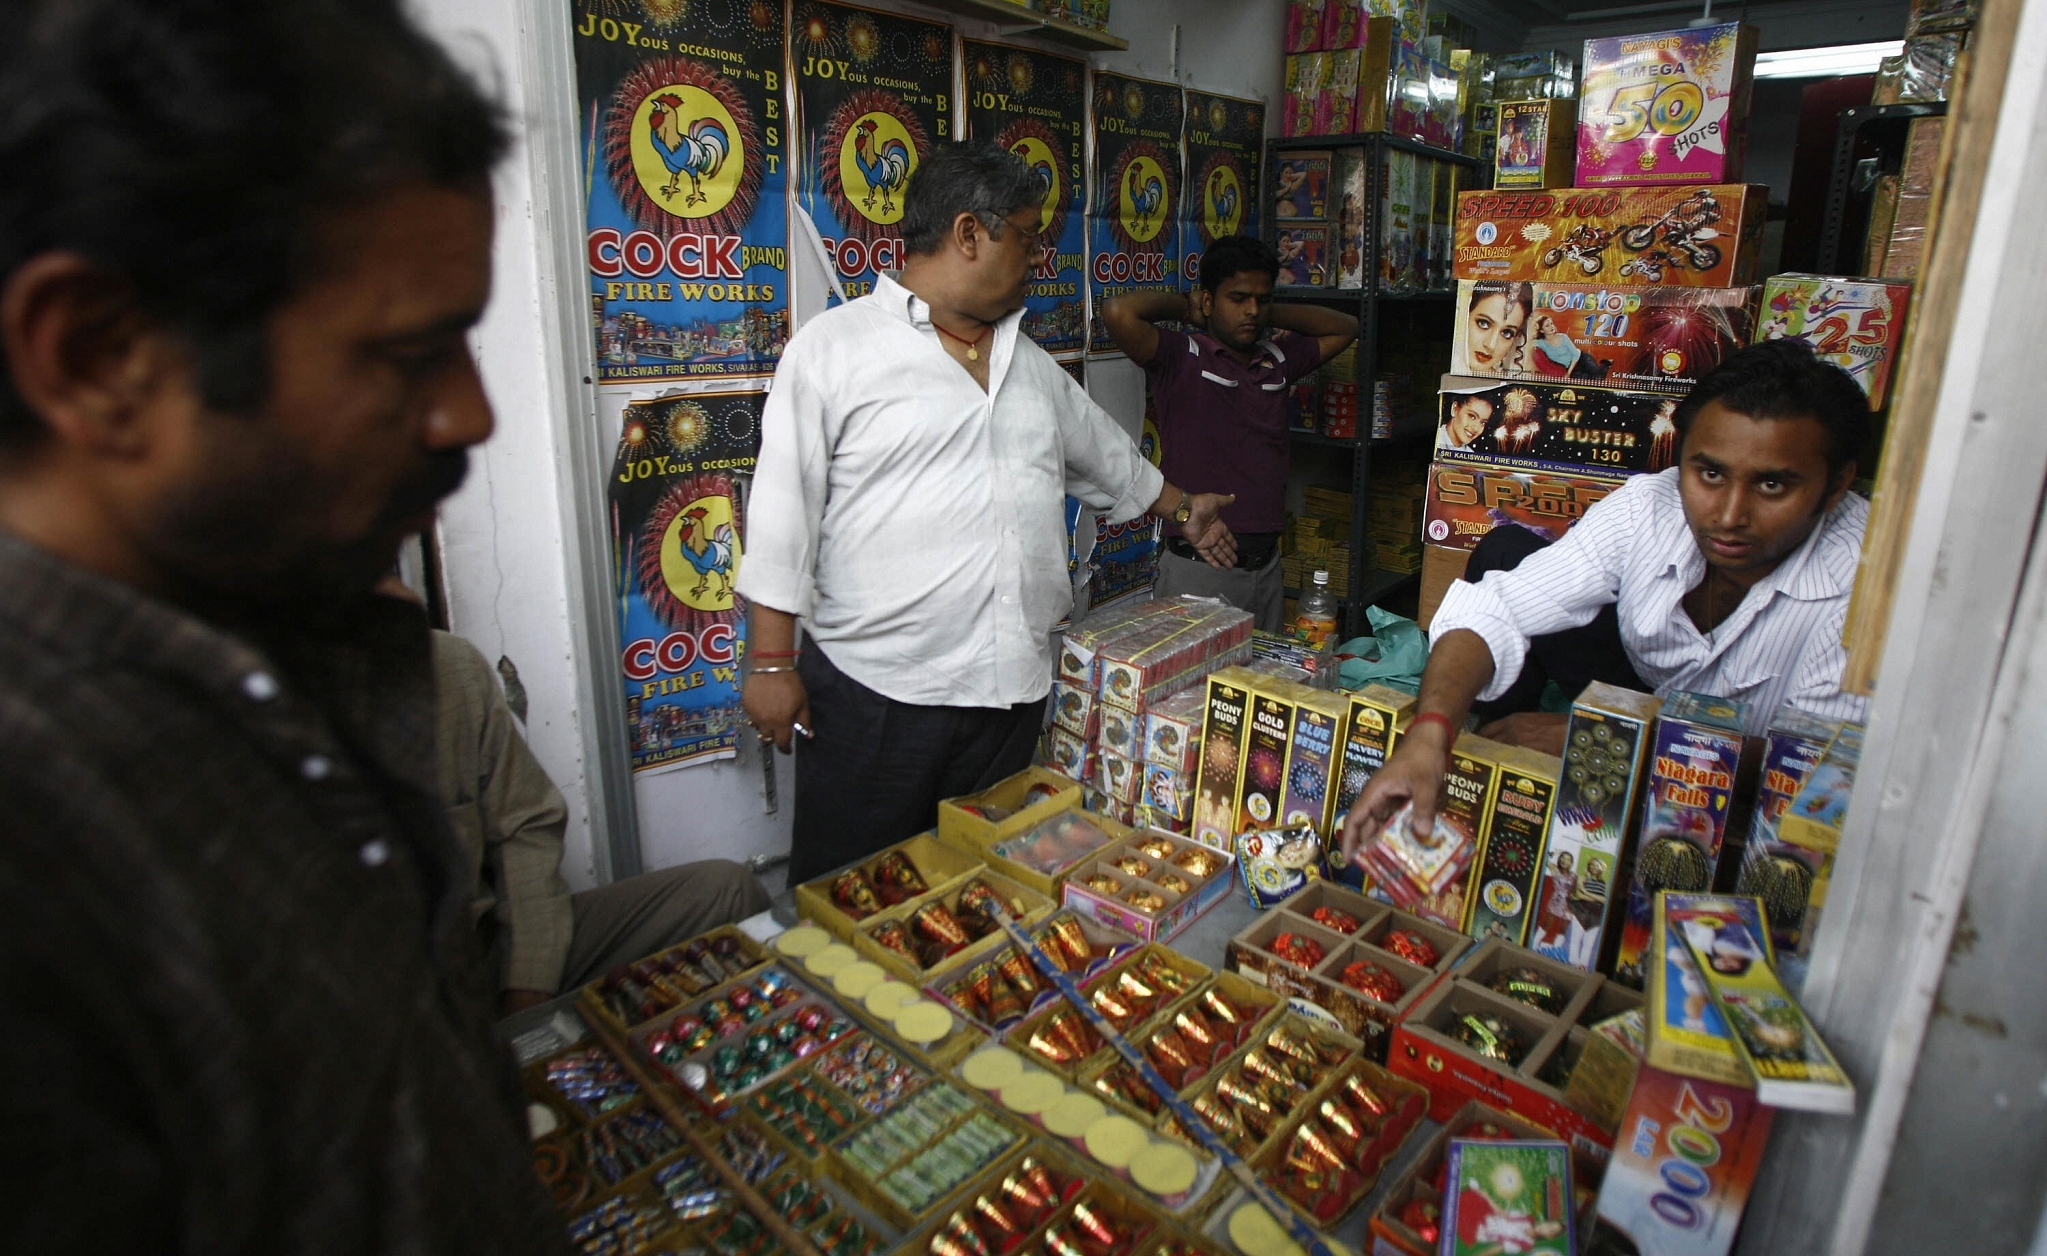 A shop selling fireworks in Delhi (NICHOLAS BRADLEY/AFP/Getty Images)